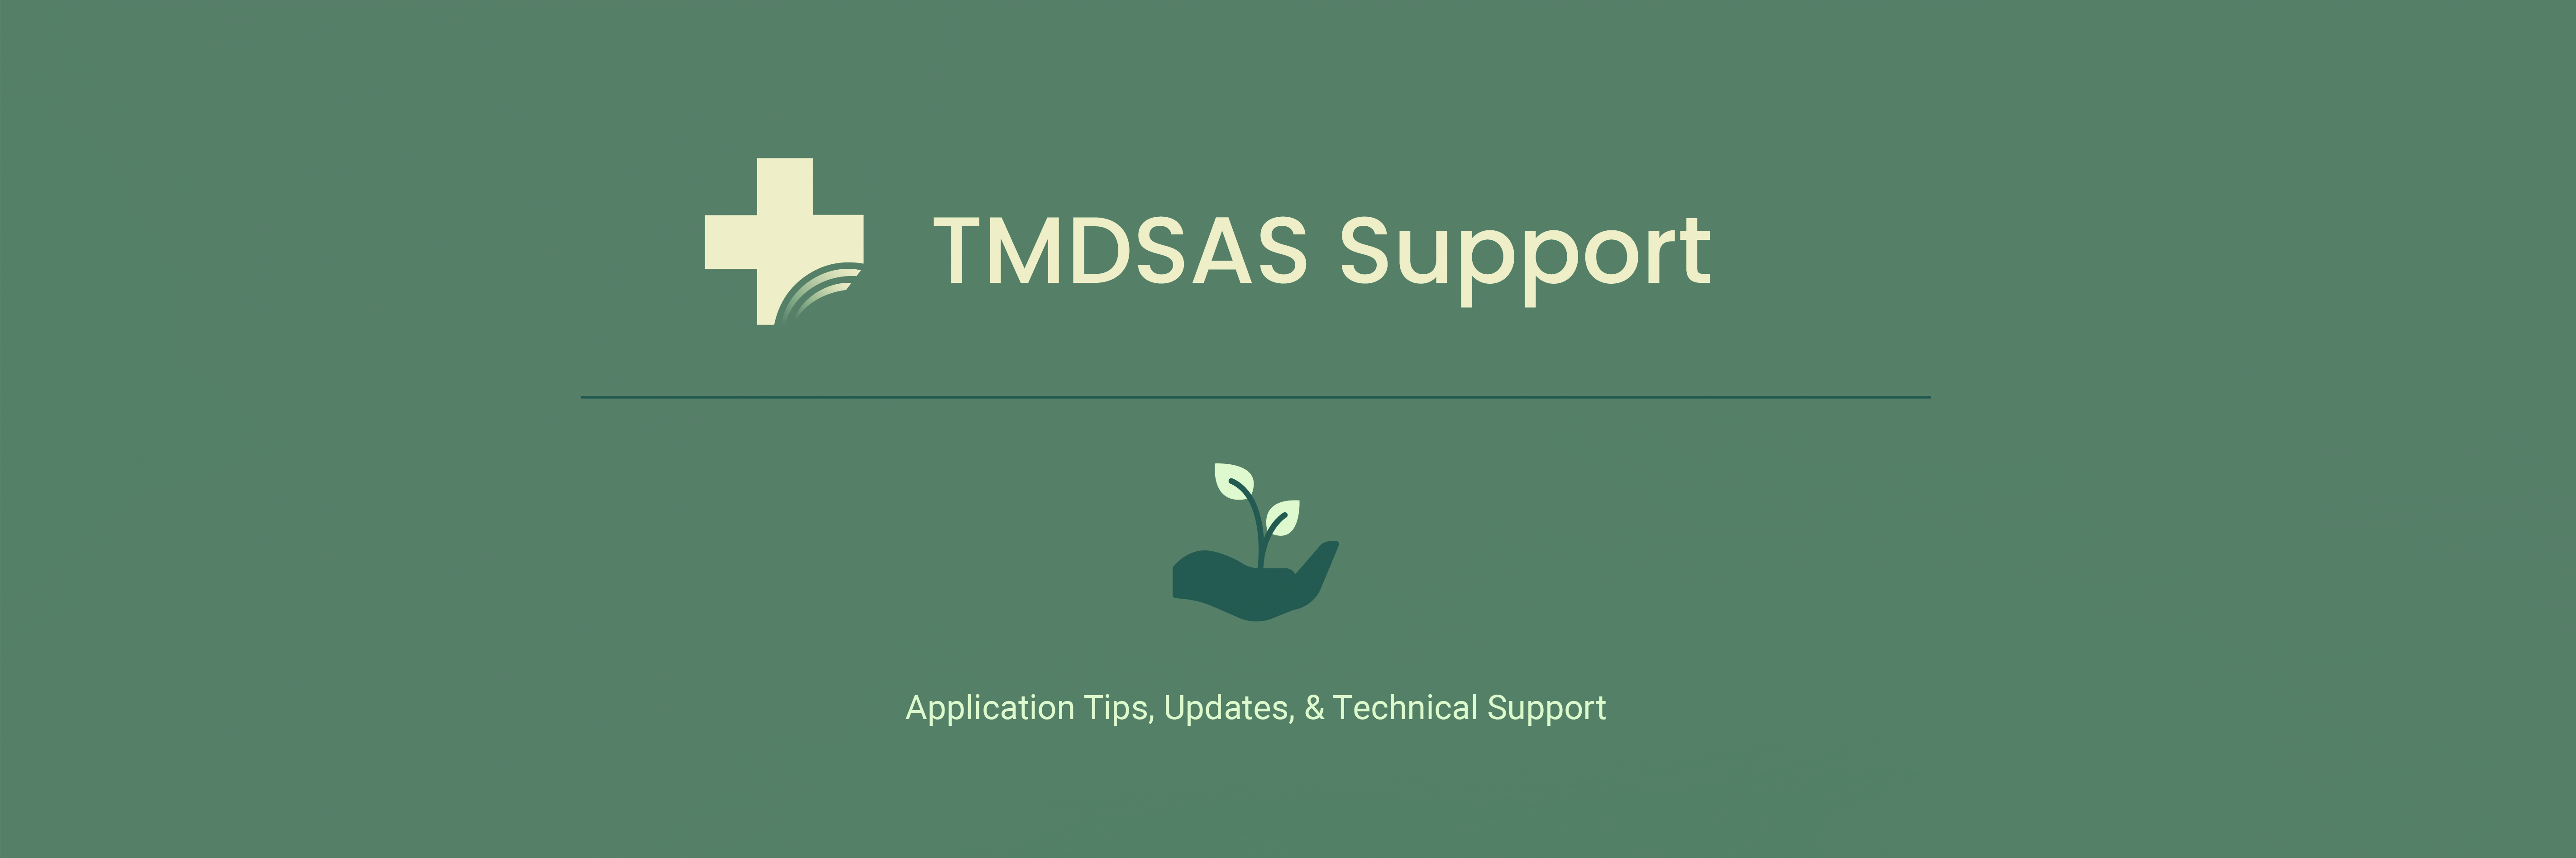 TMDSAS Support